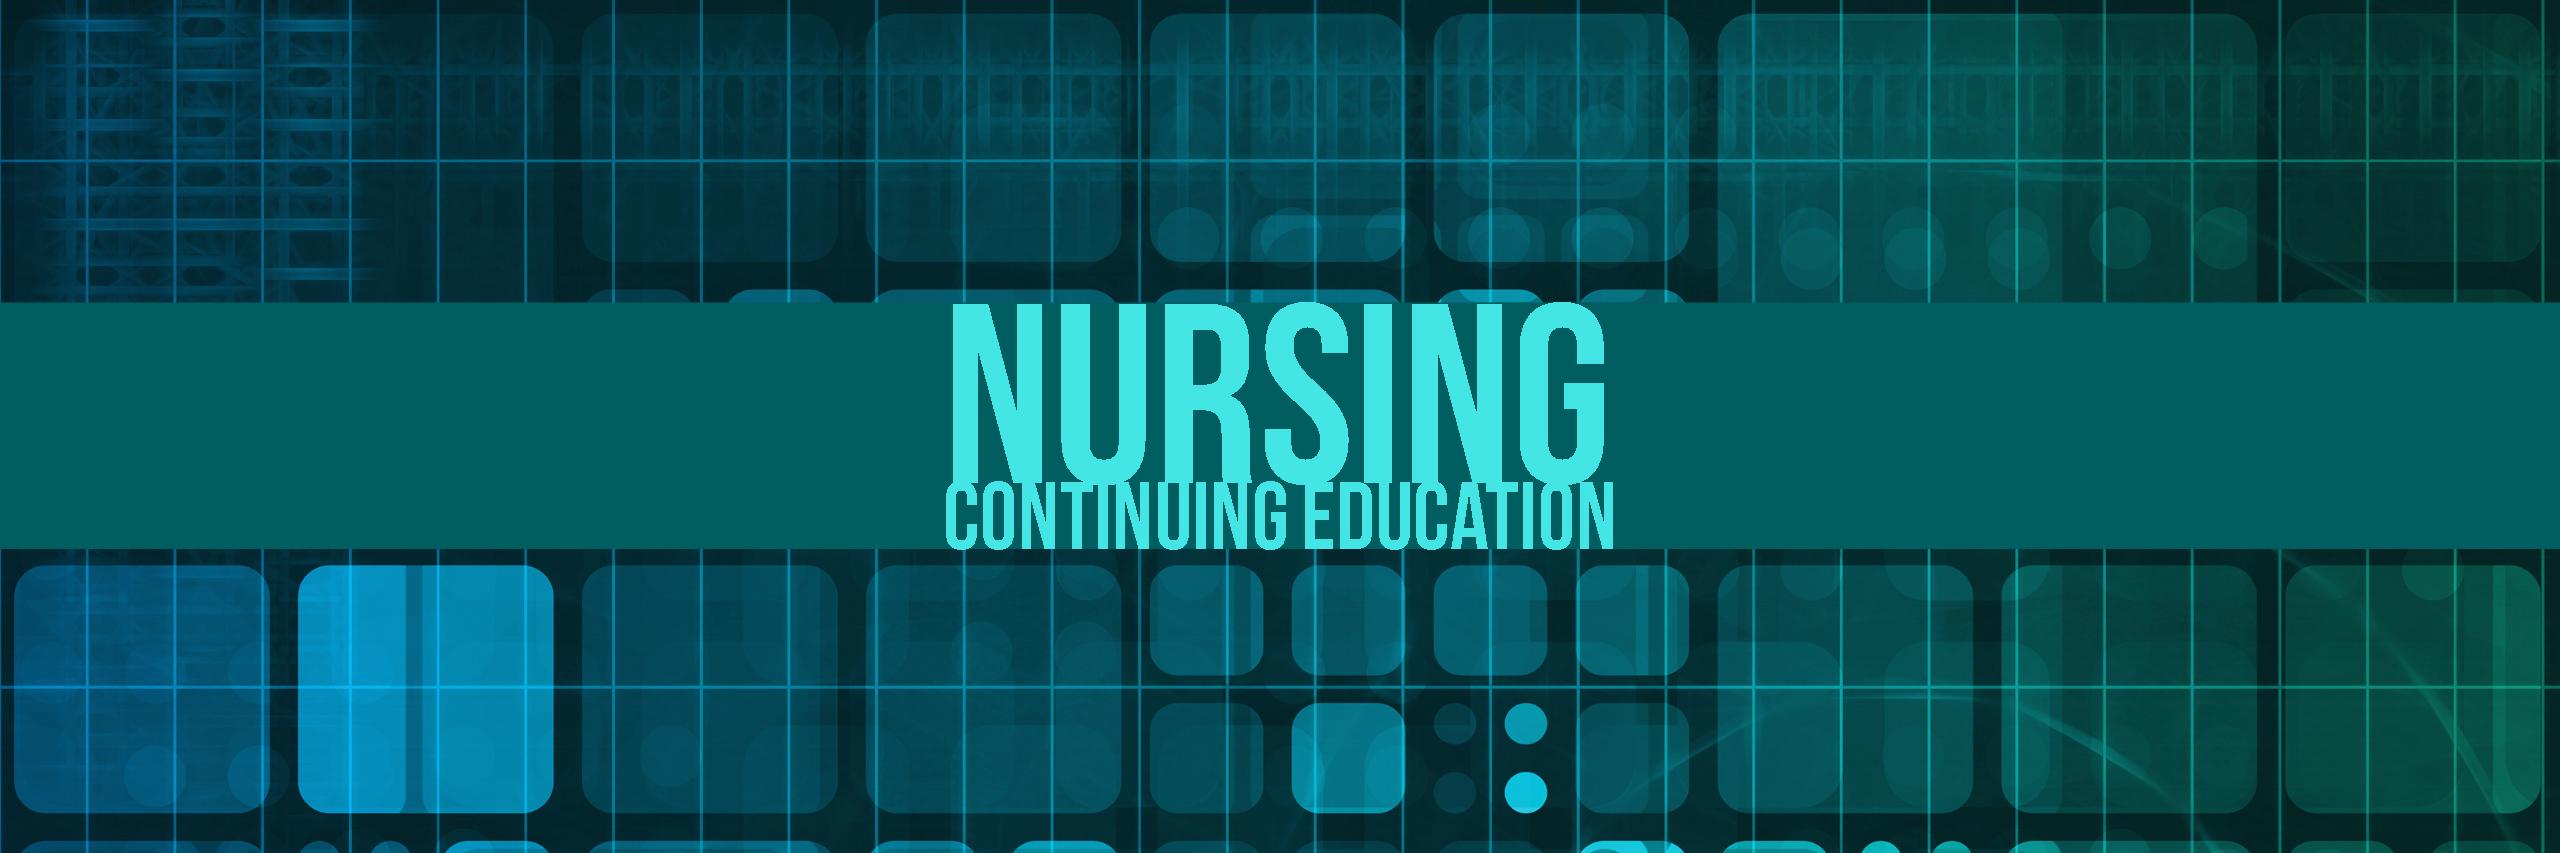 Nursing Continuing Education